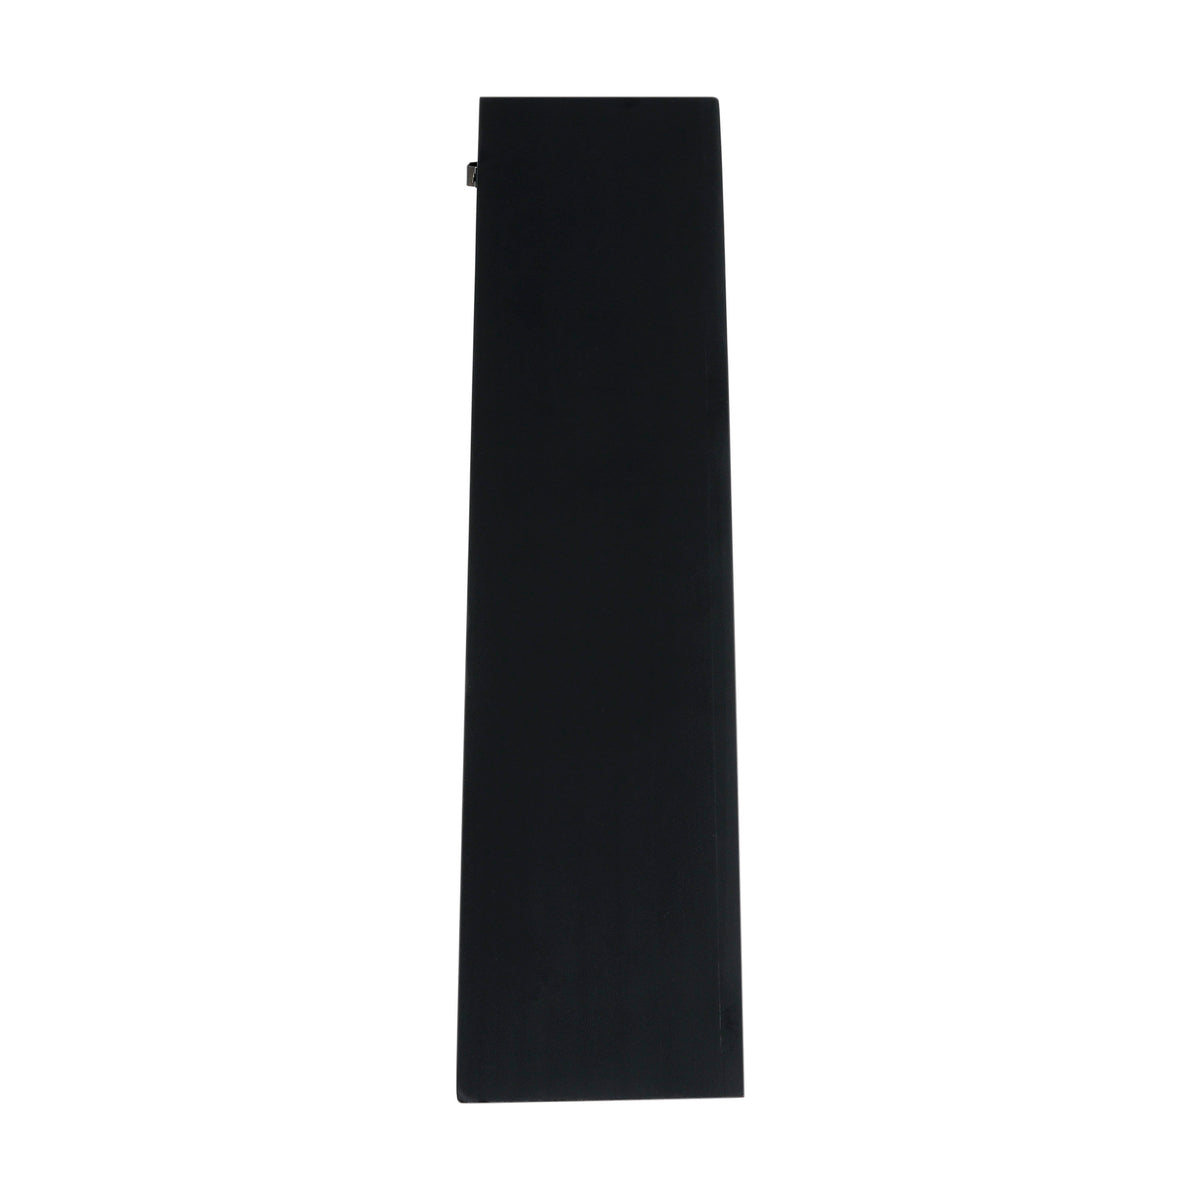 Black |#| Solid Wood Black Display Case for 9.5 x 5 Veterans Flag